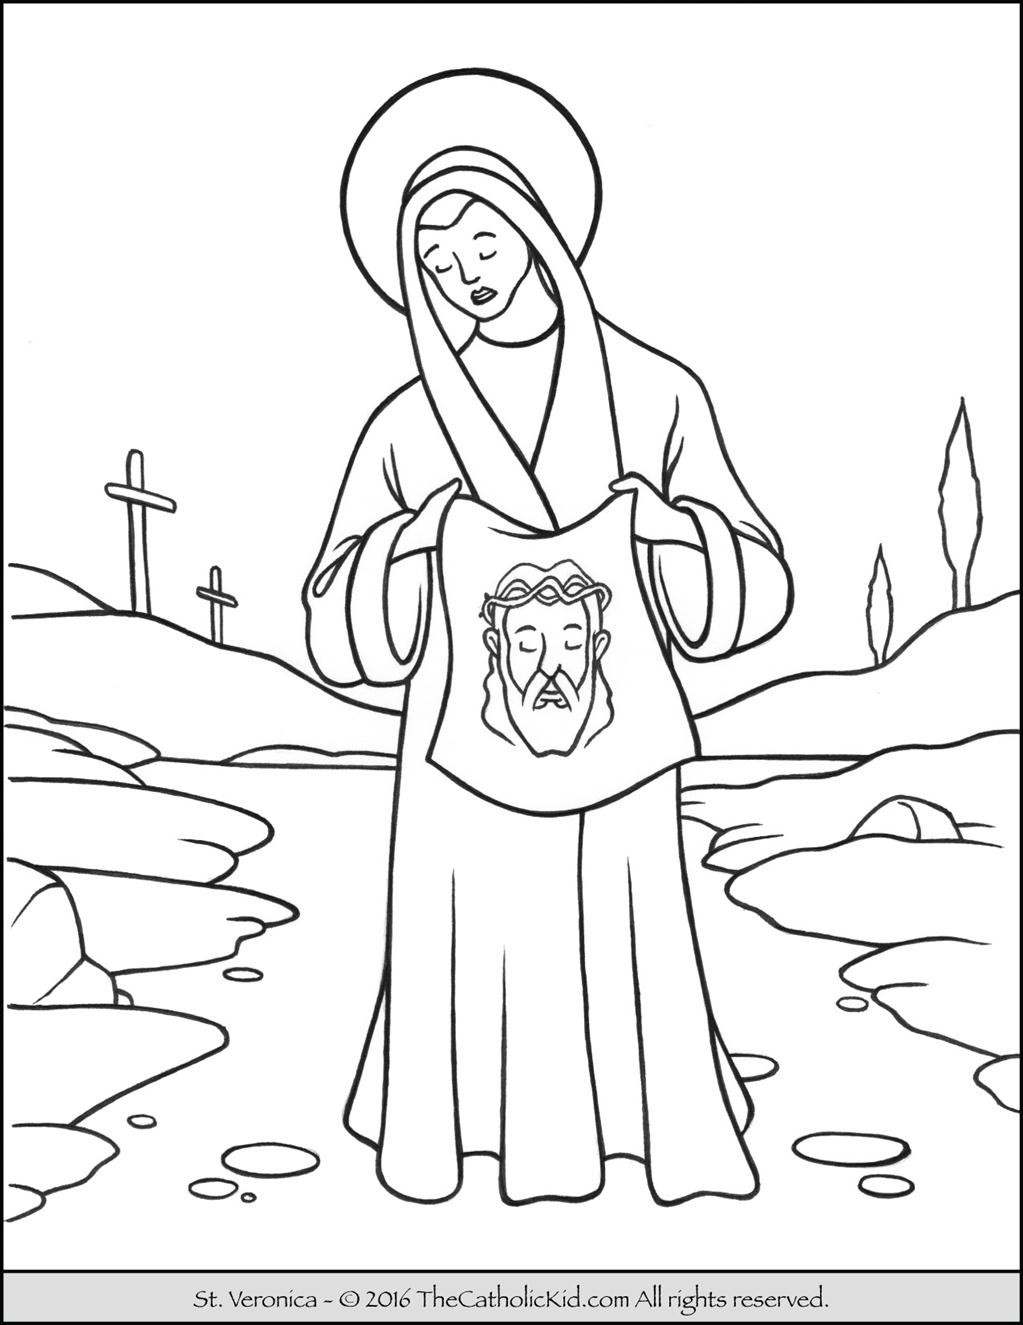 Saint Francis Coloring Page at GetColorings.com | Free printable